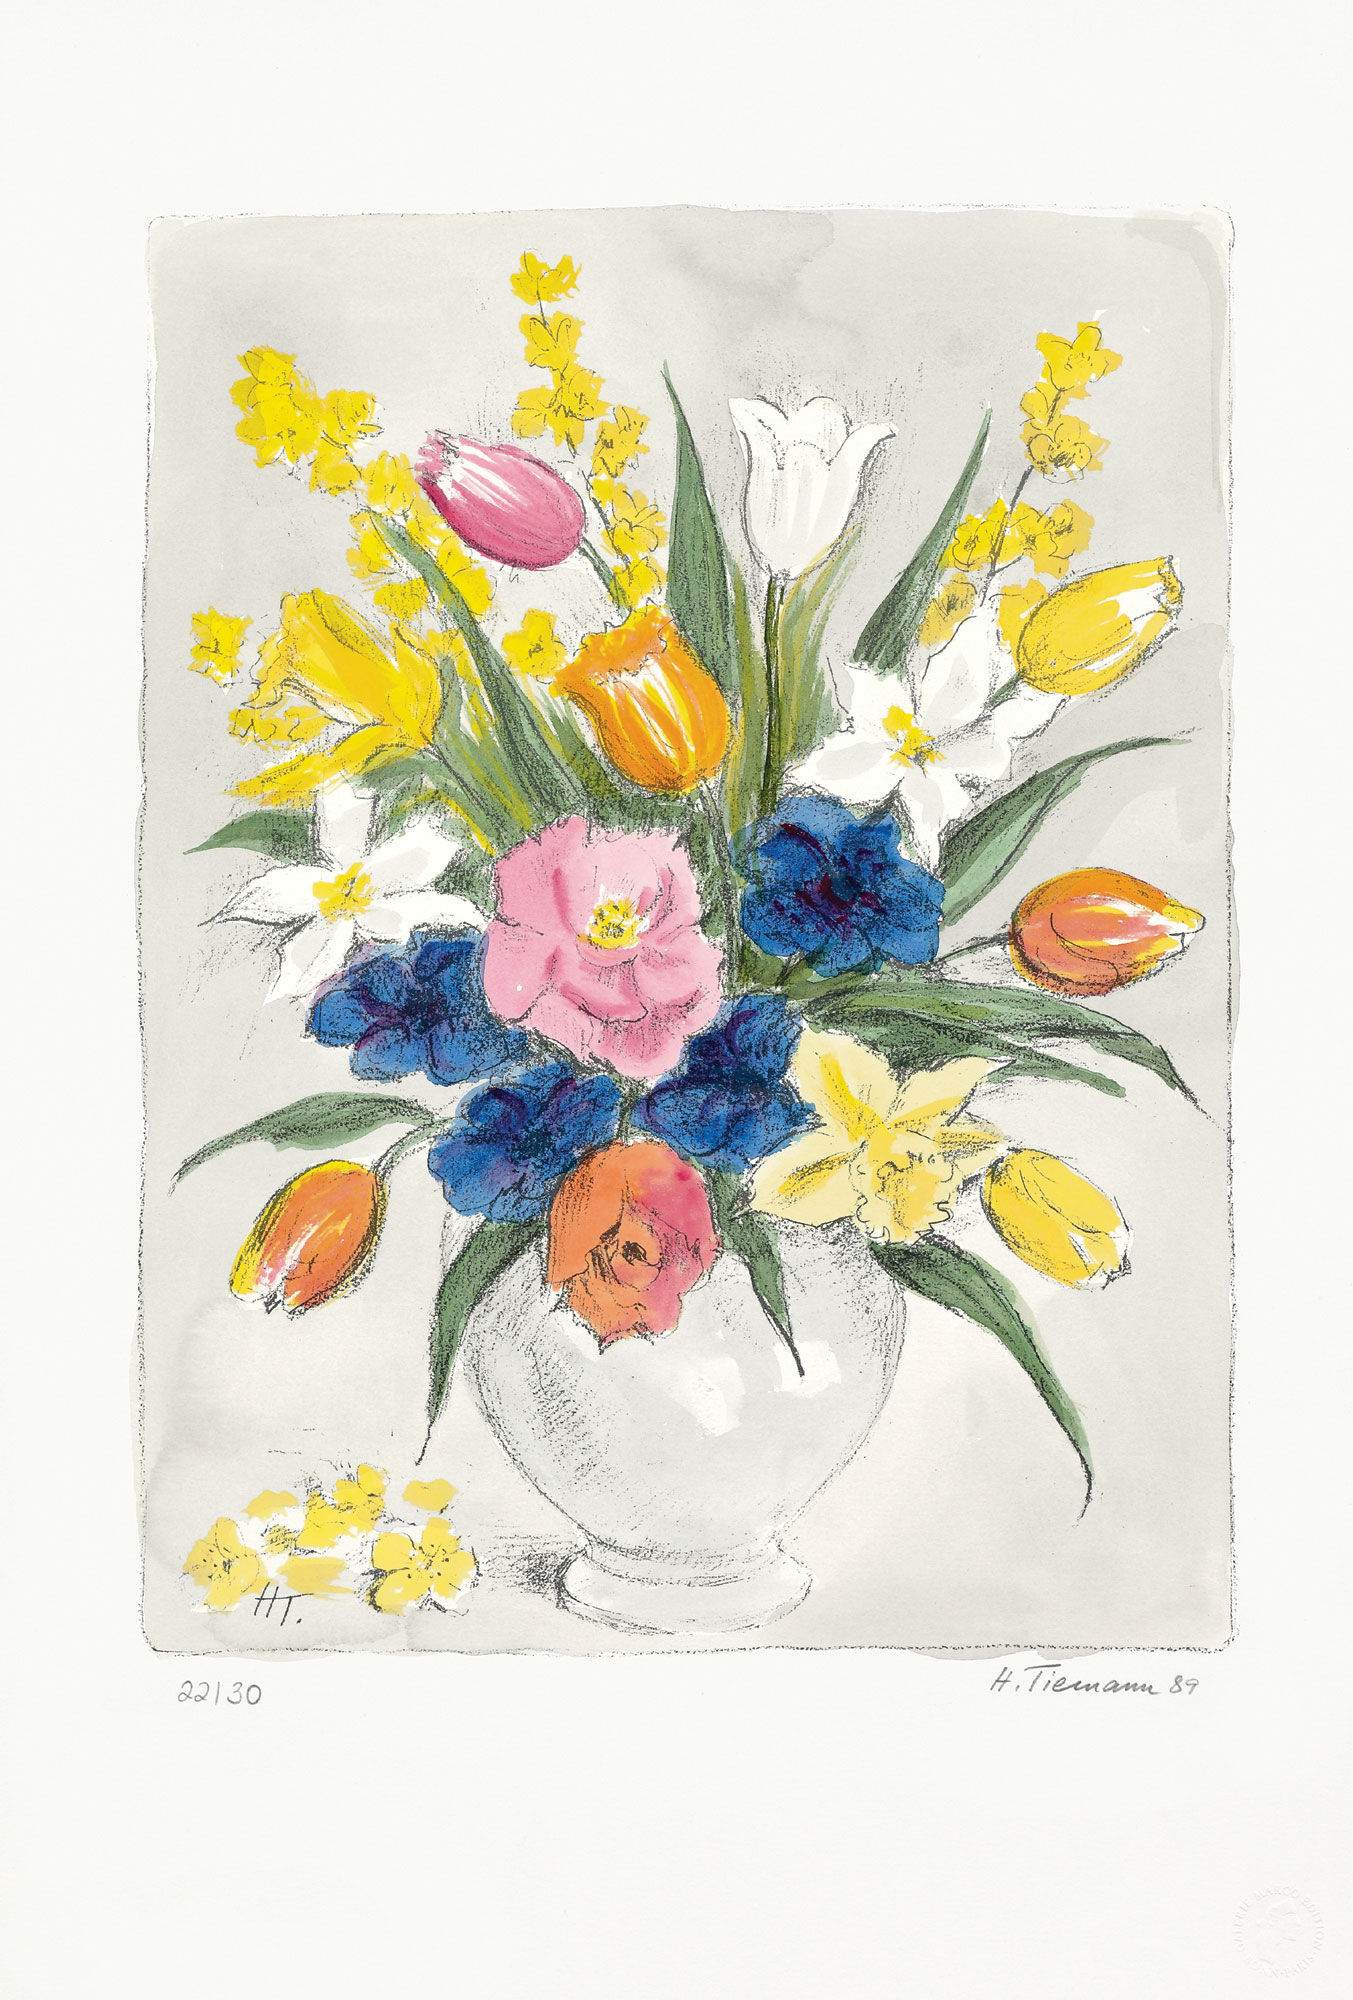 Picture "Spring" (1989), unframed by Helga Tiemann